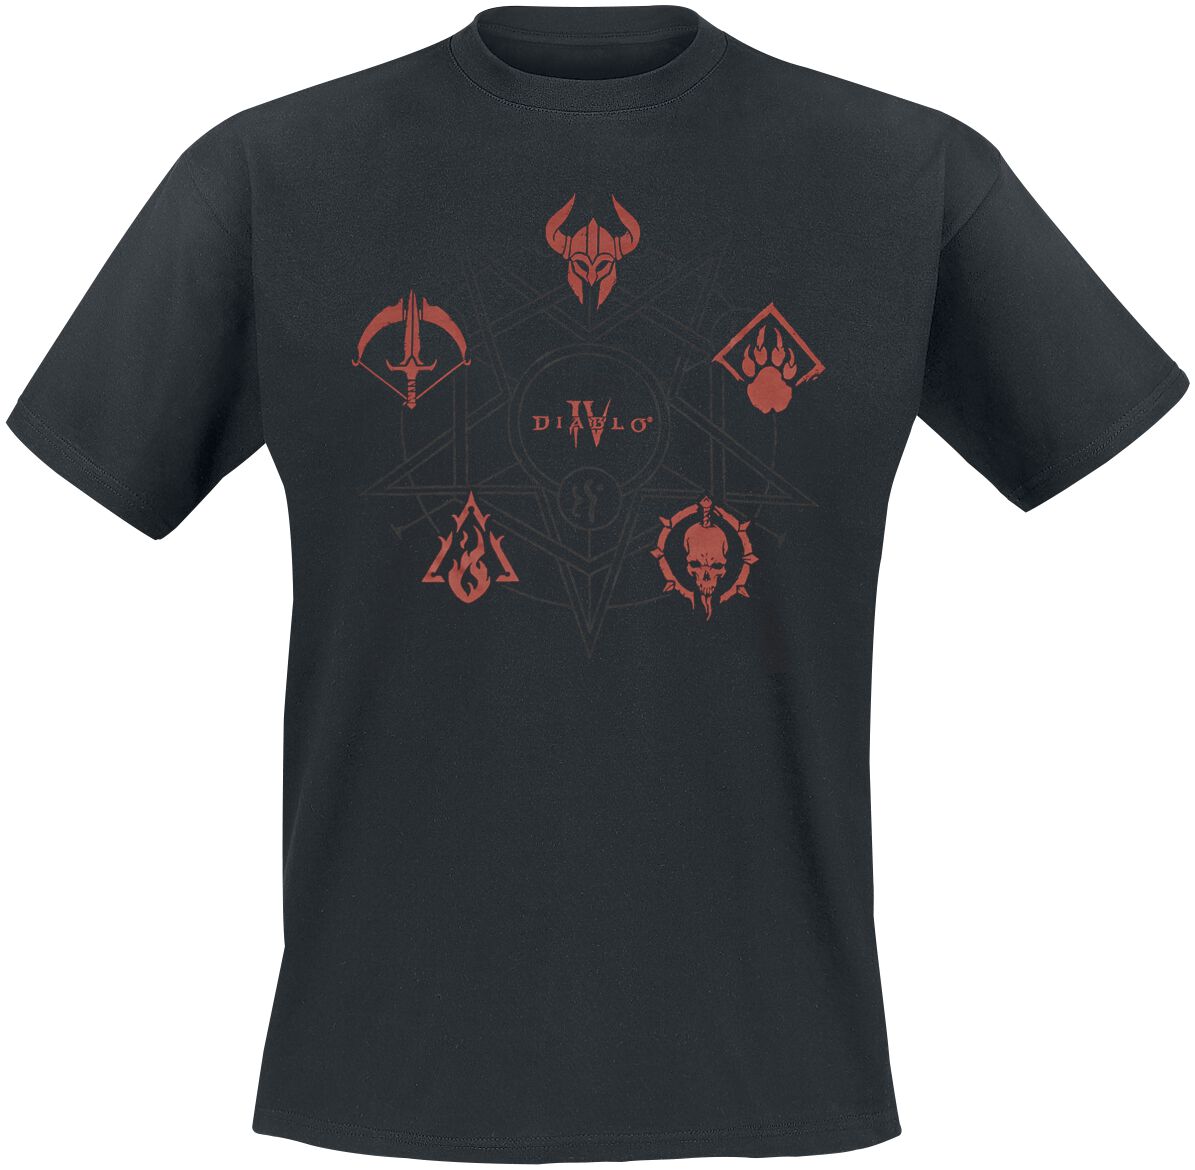 Diablo 4 - Class Icons T-Shirt schwarz in S